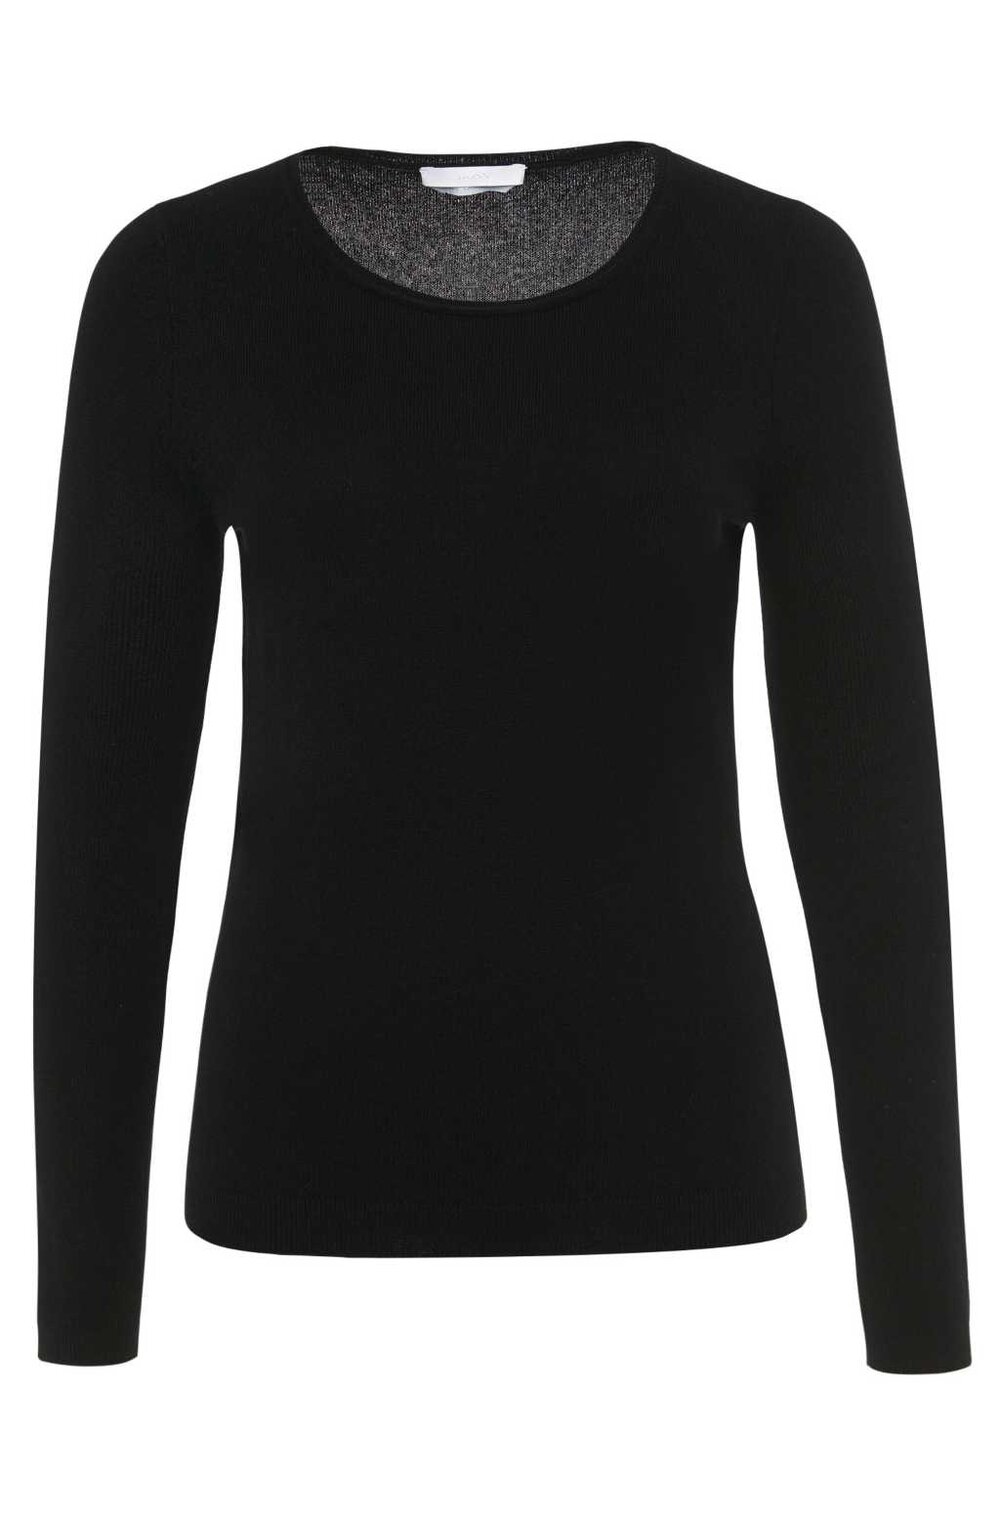 Hugo Boss Fayna Cashmere Sweater in Black — UFO No More